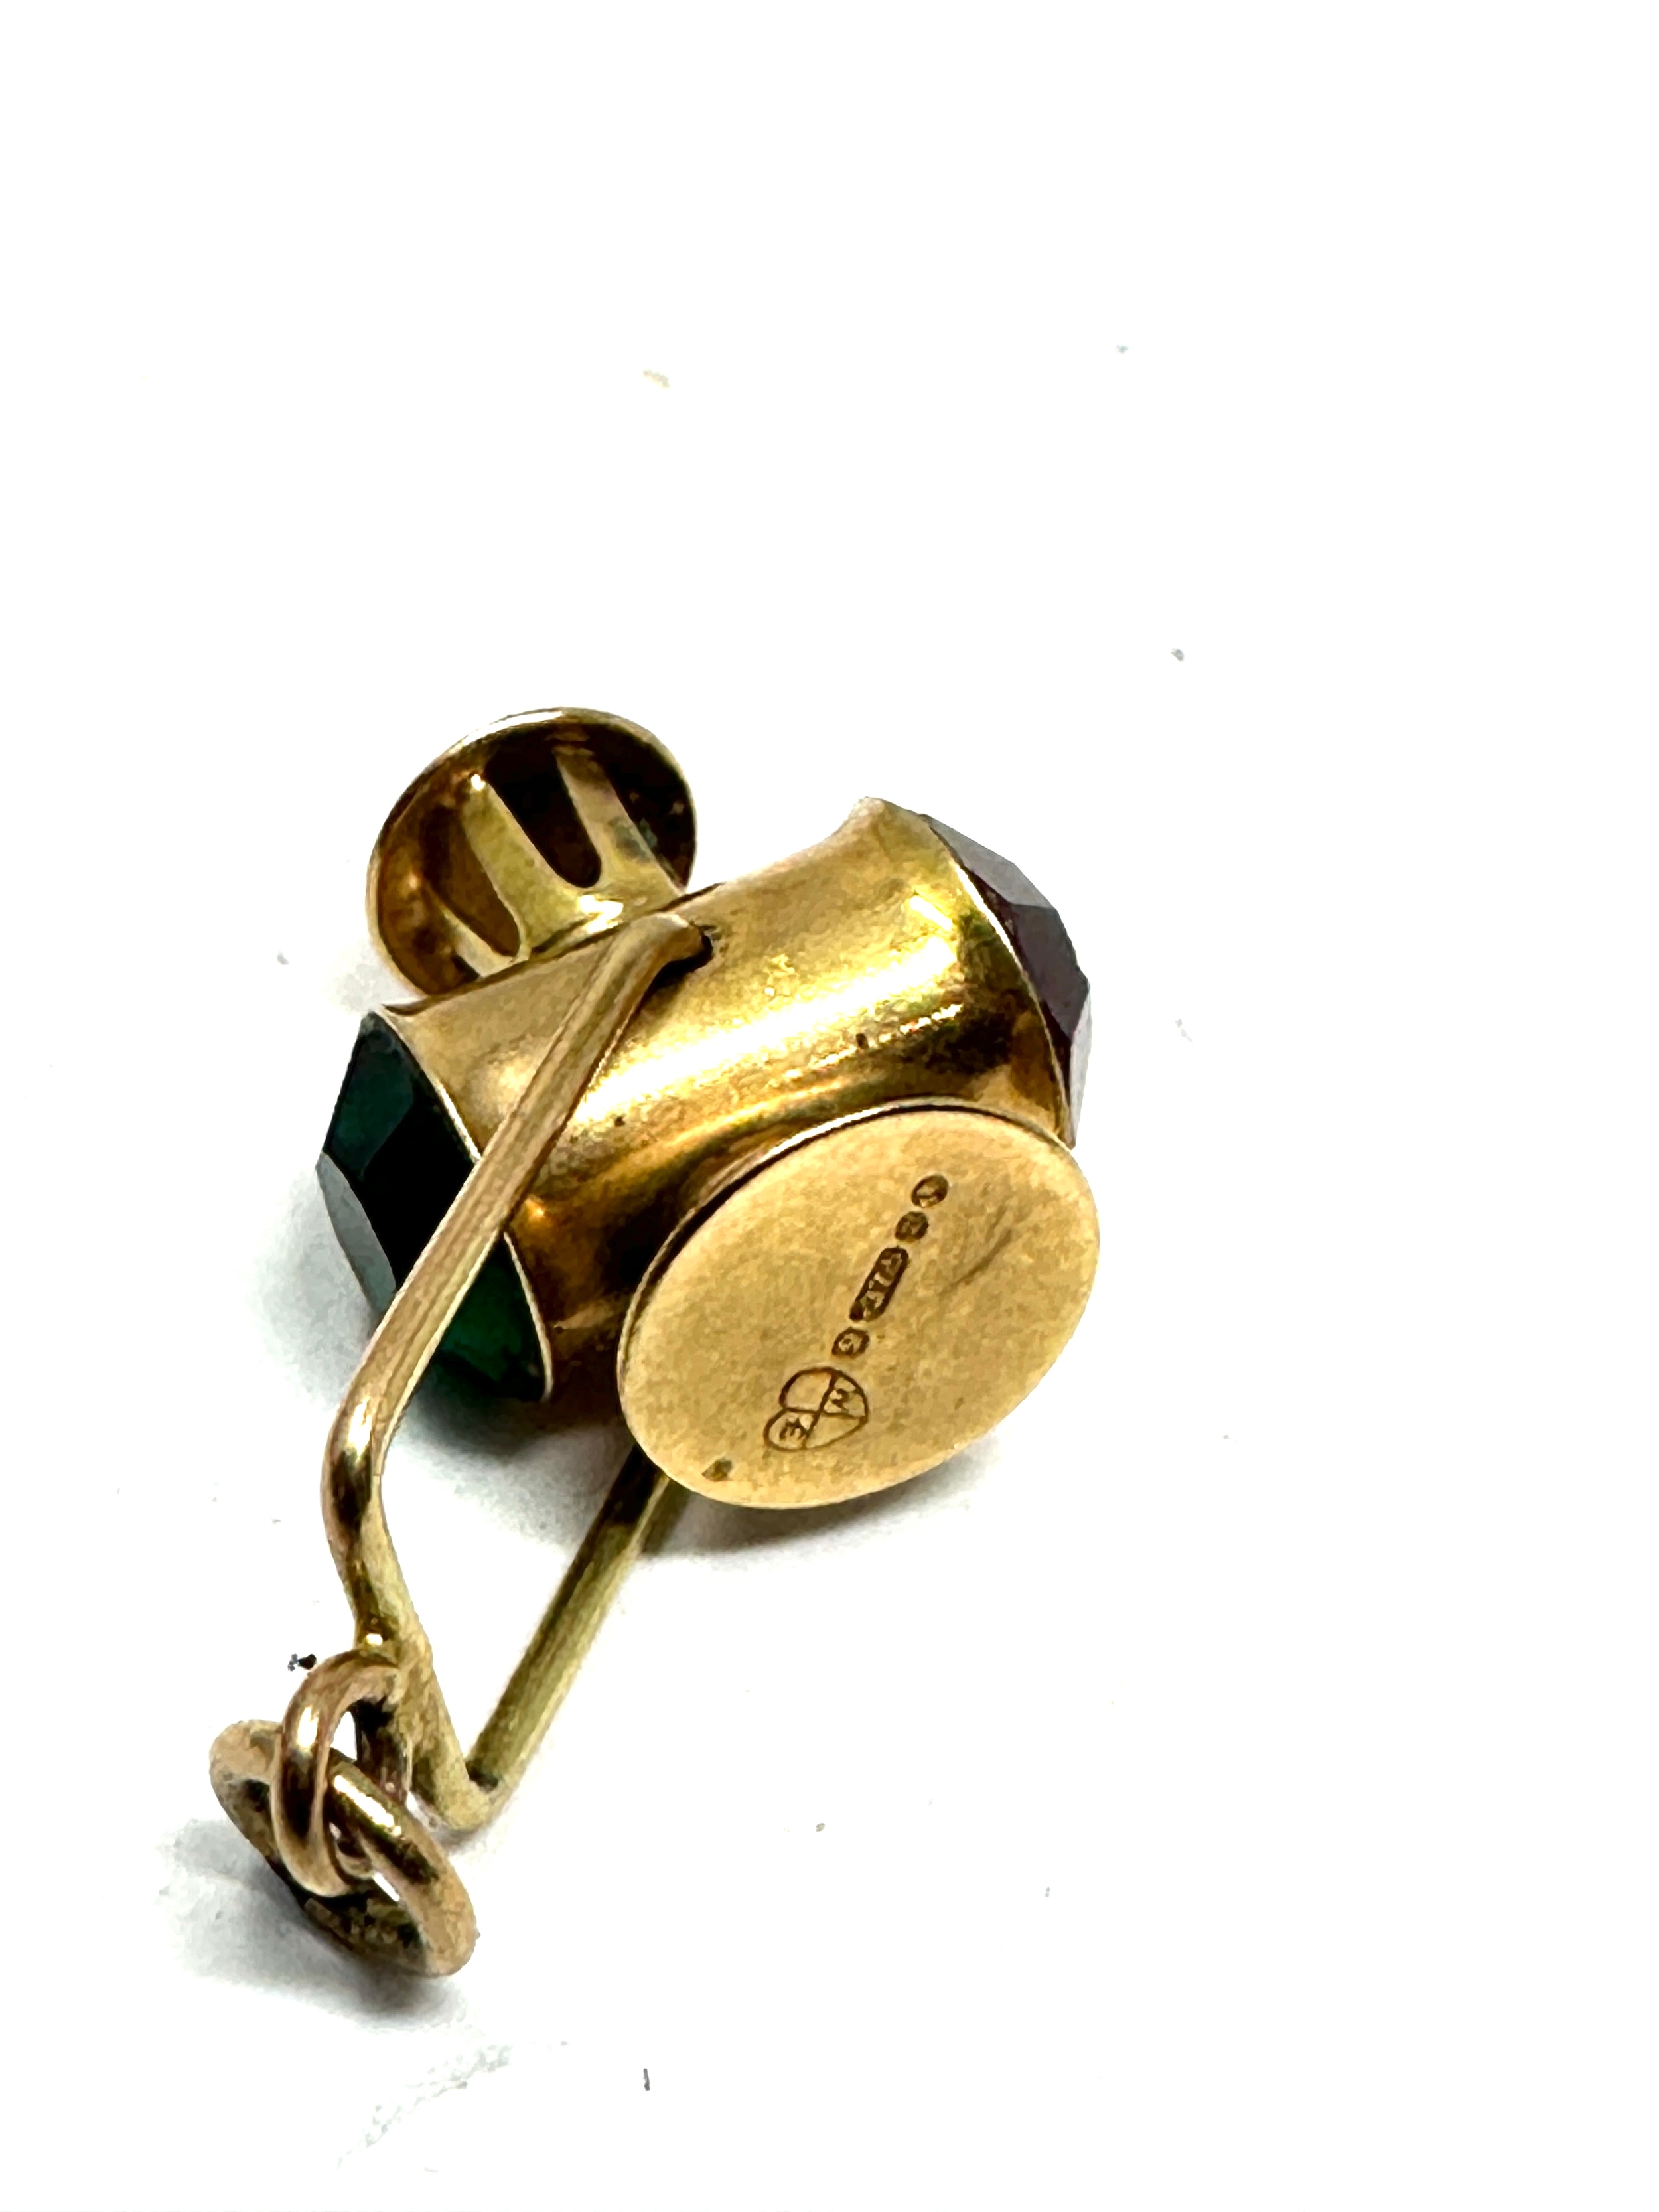 Vintage 9ct gold lantern charm weight 1.9g - Image 3 of 3